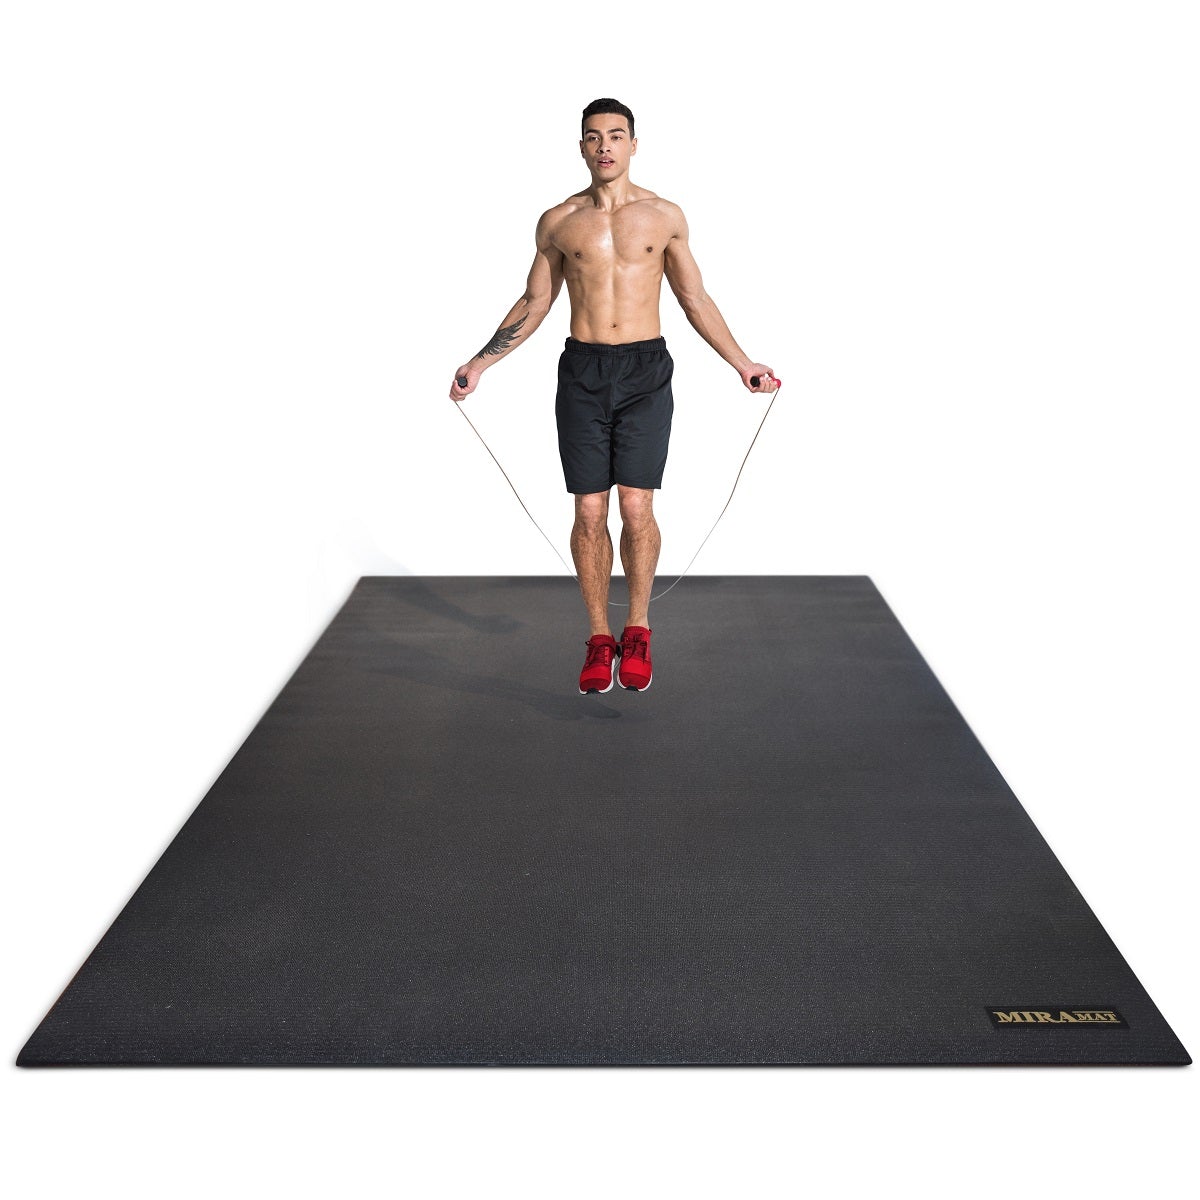 Miramat® Mega - 214cm x 153cm - Very Large Exercise And Yoga Mat